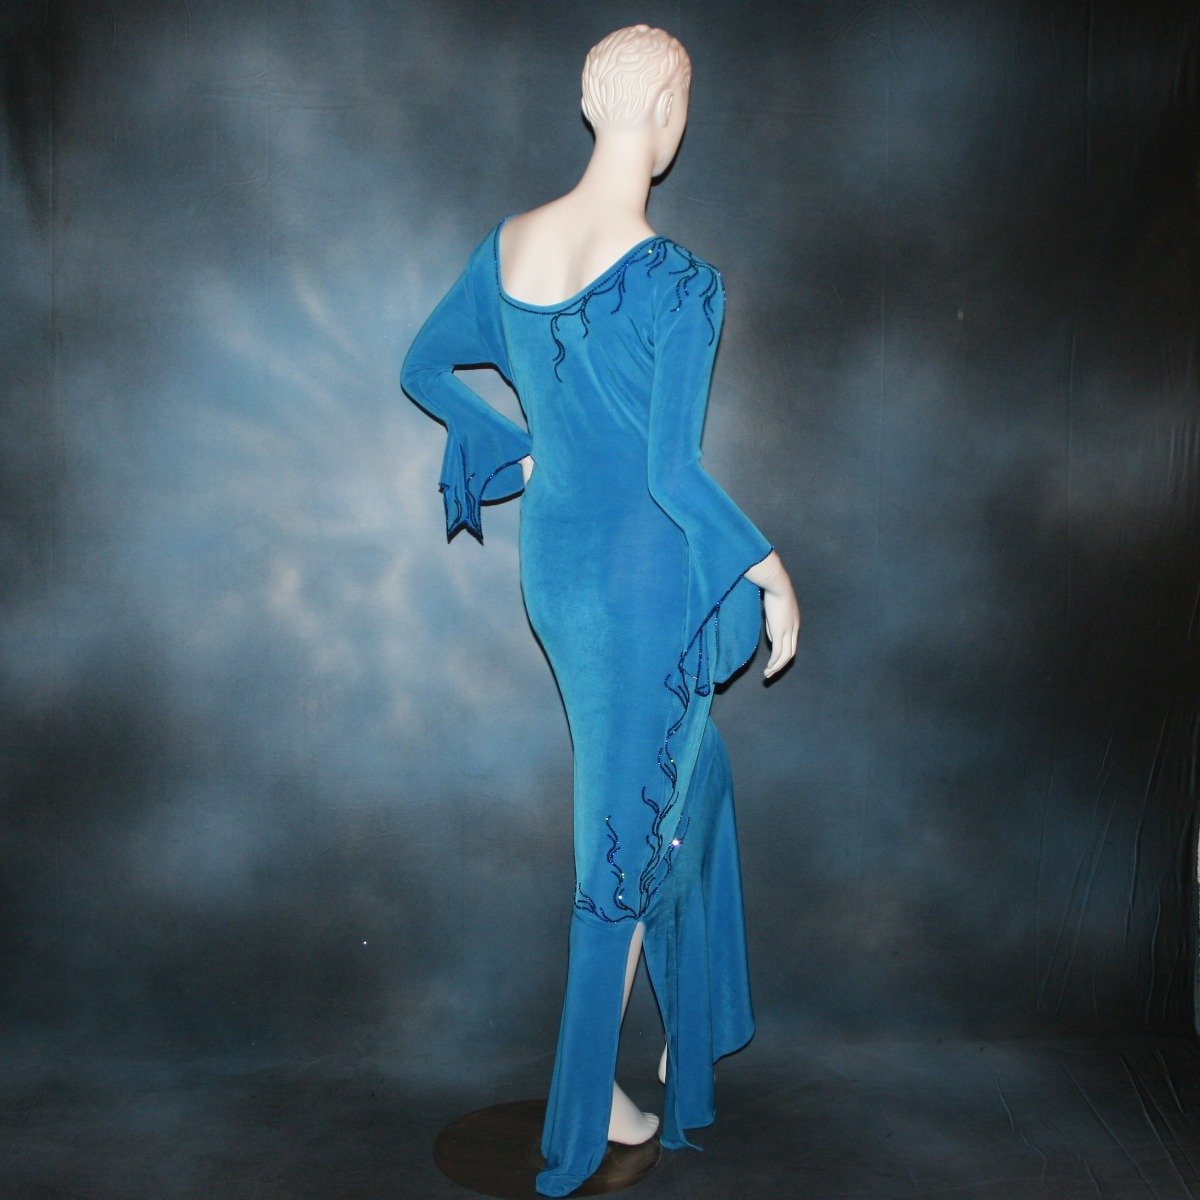 Crystal's Creations back view of blue Latin/rhythm dress created of luxurious blue slinky, embellished with Swarovski detailed rhinestone work